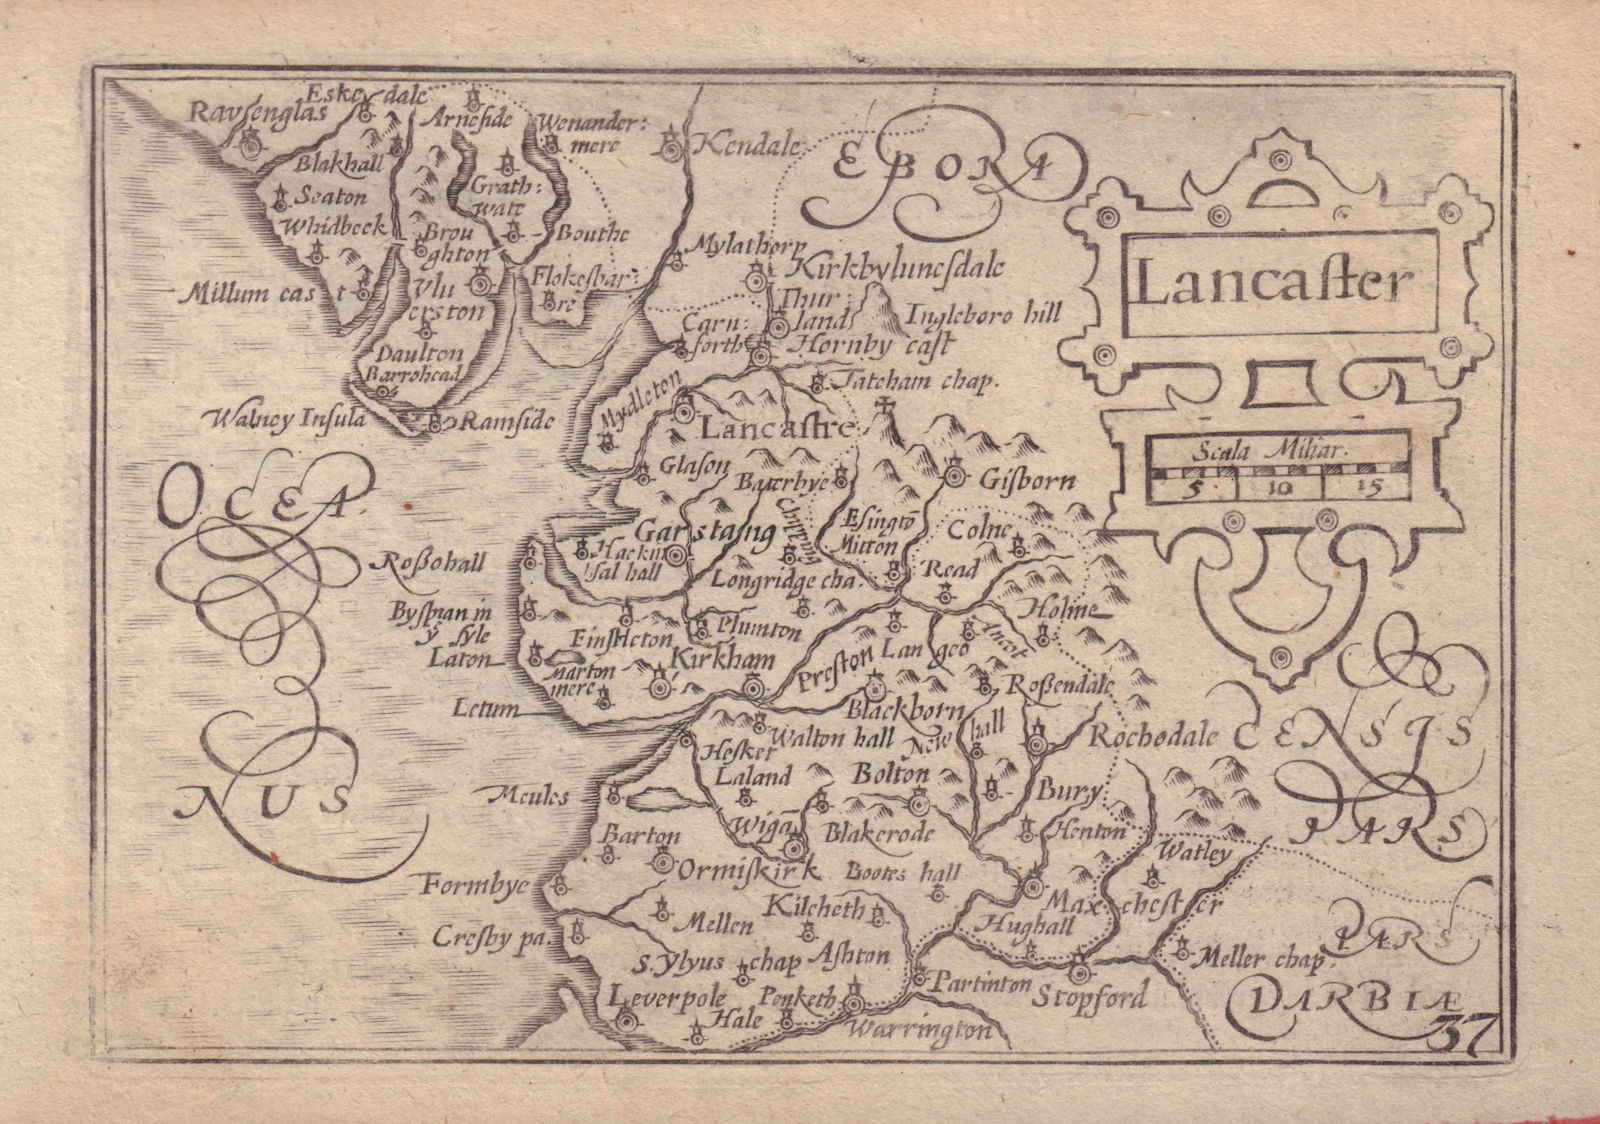 Associate Product Lancaster by van den Keere. "Speed miniature" Lancashire county map 1632